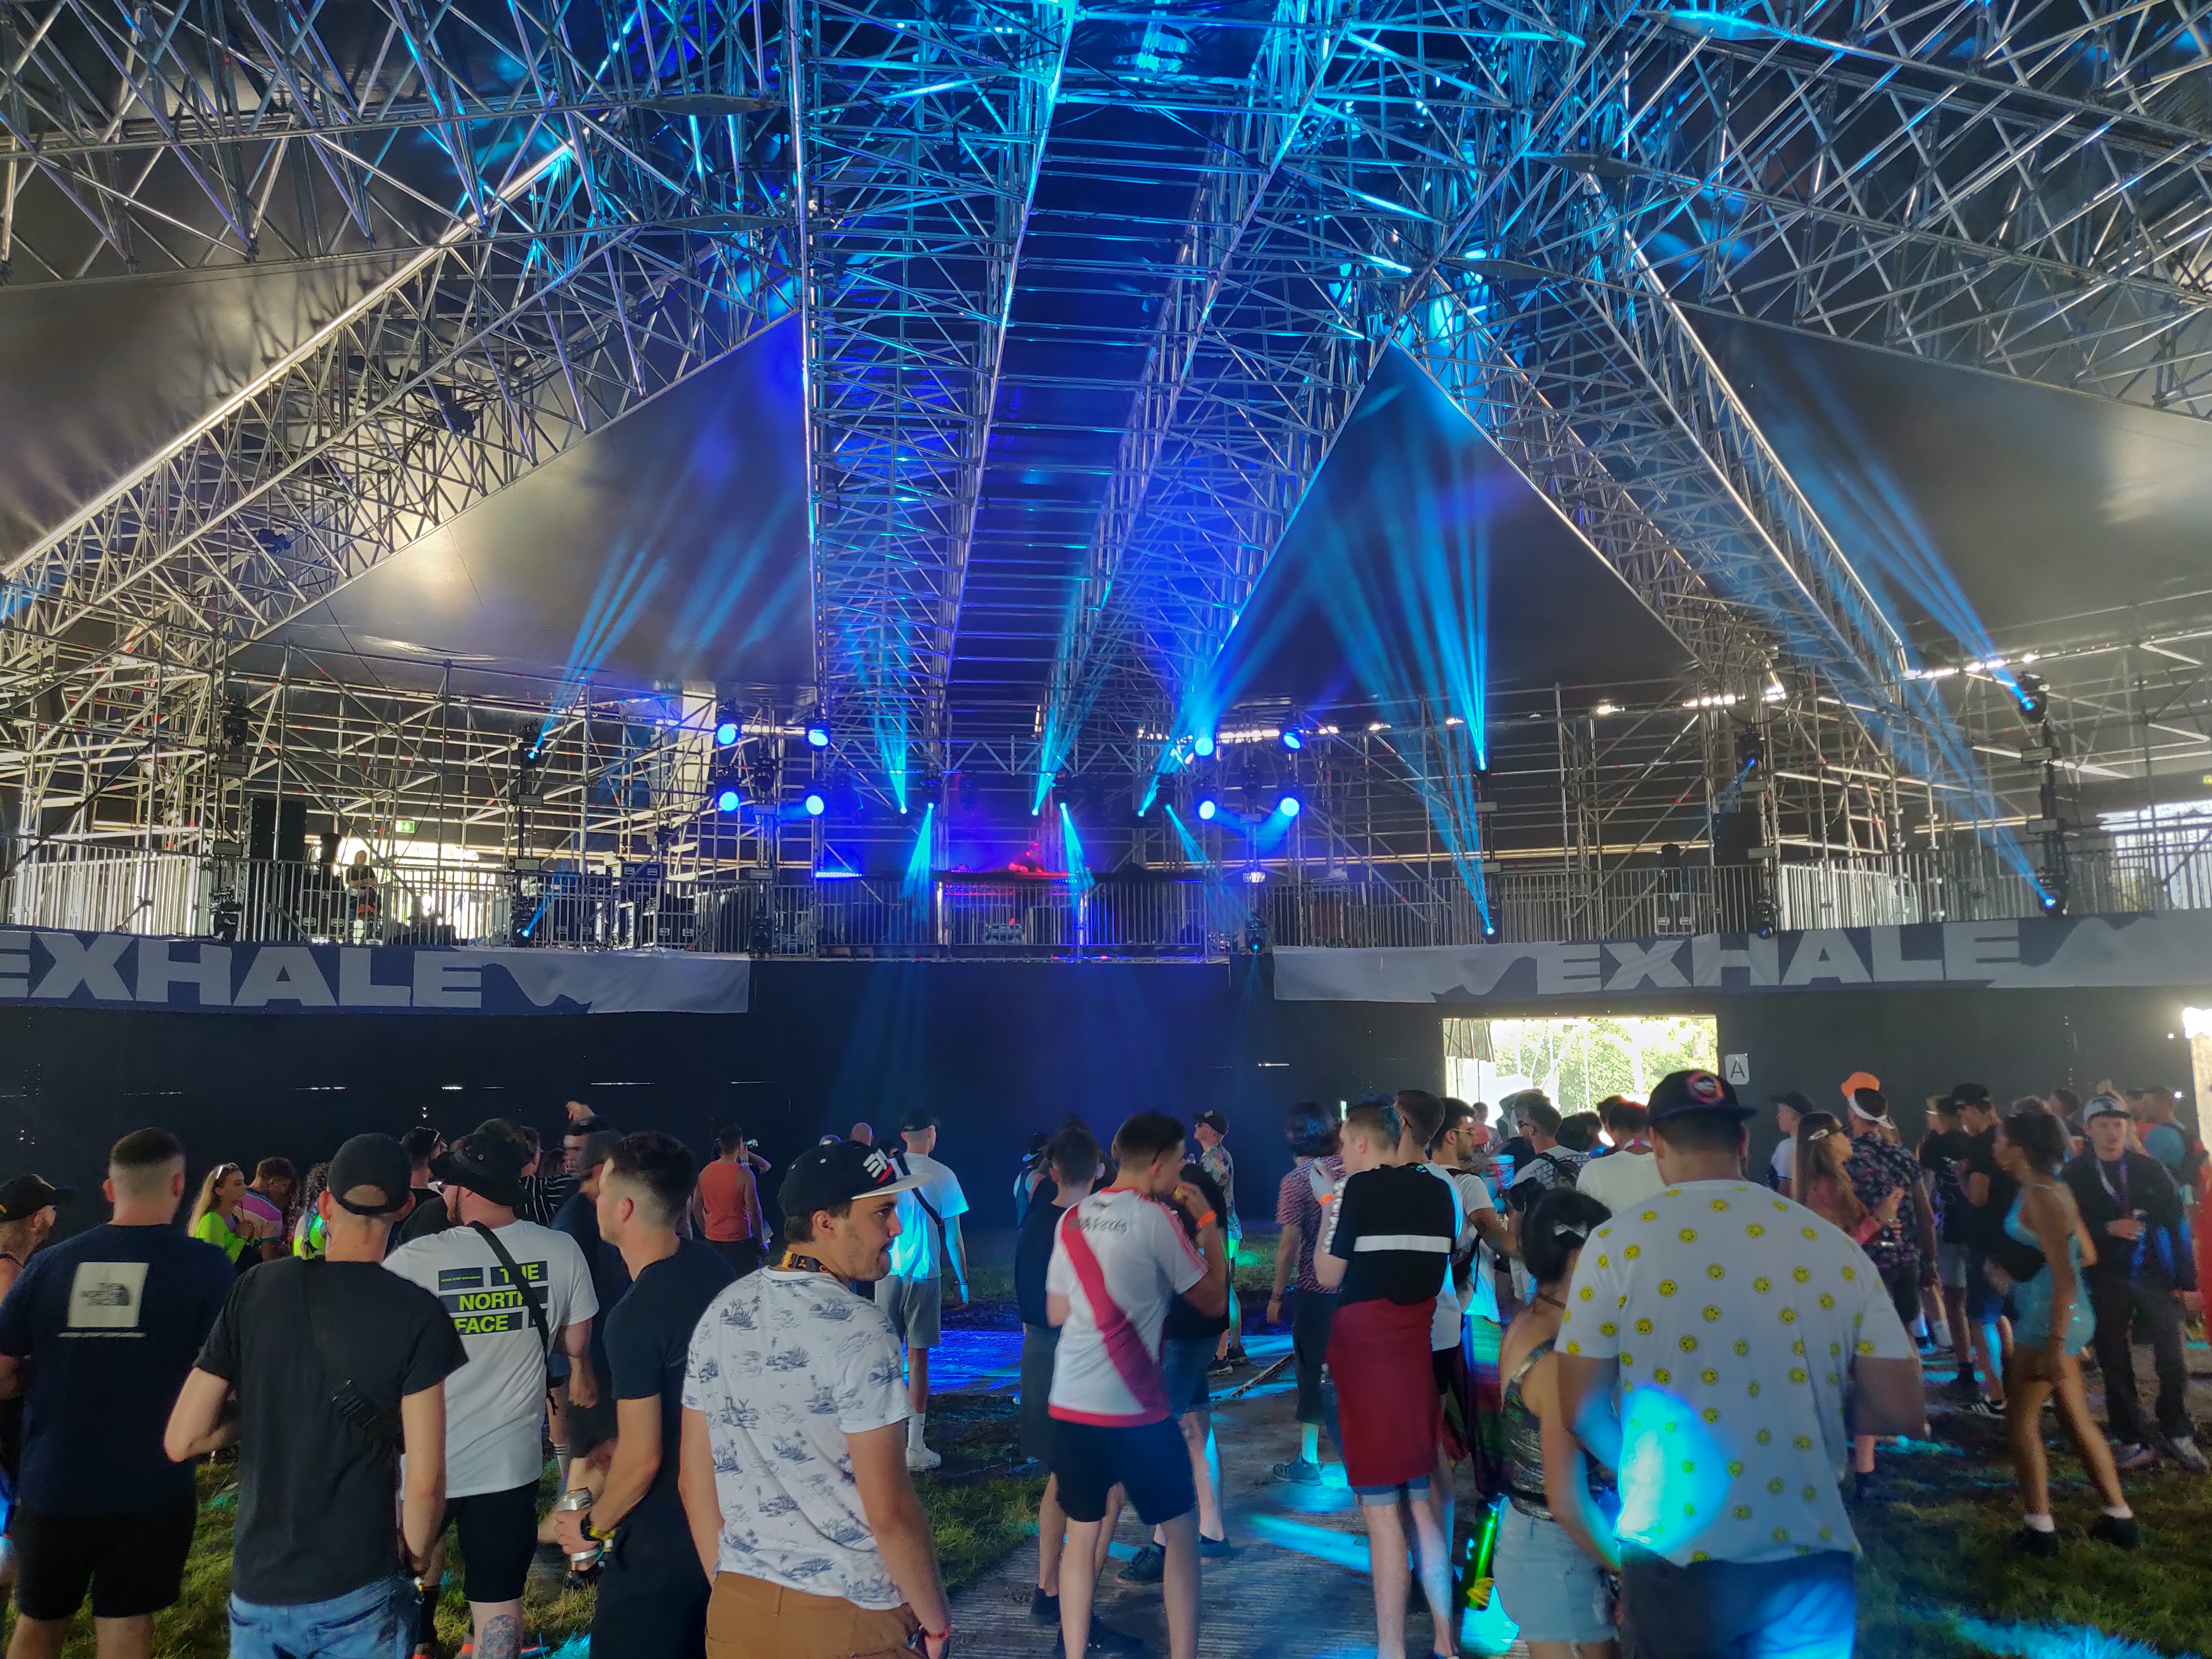 Silo stage - Creamfields 2019 - Passion BPM